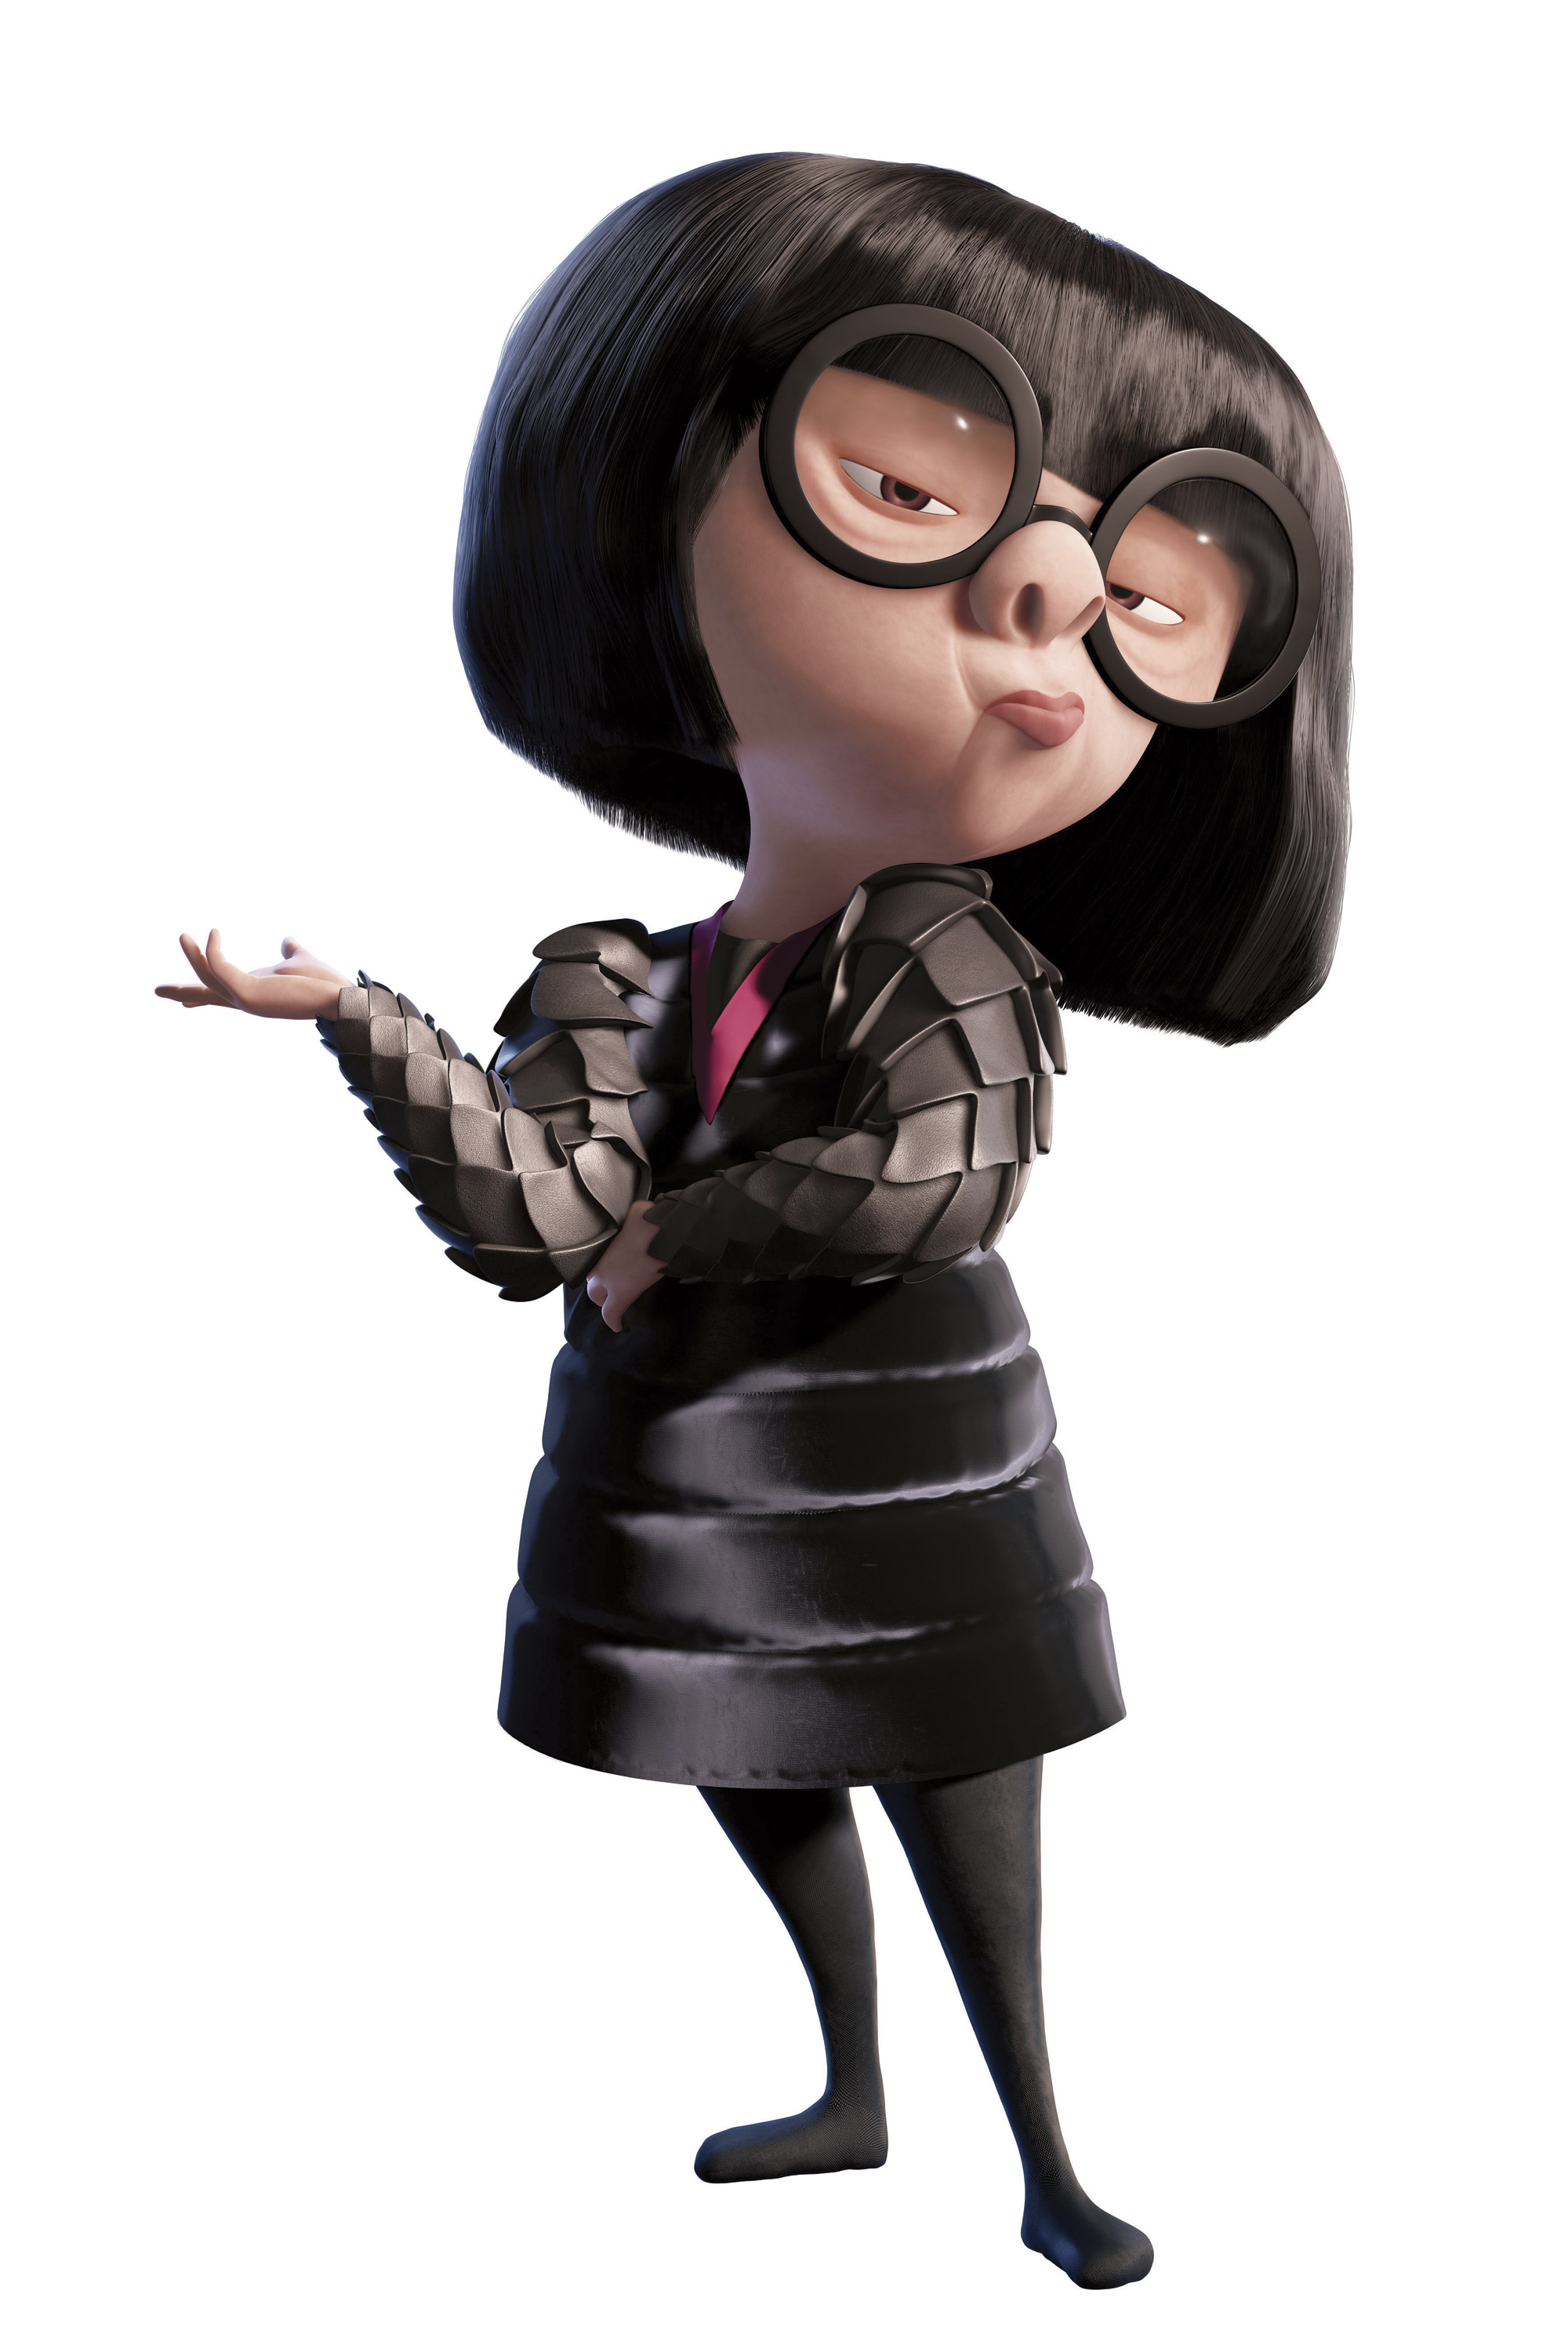 Character Edna Mode in Disney/Pixar's The Incredibles